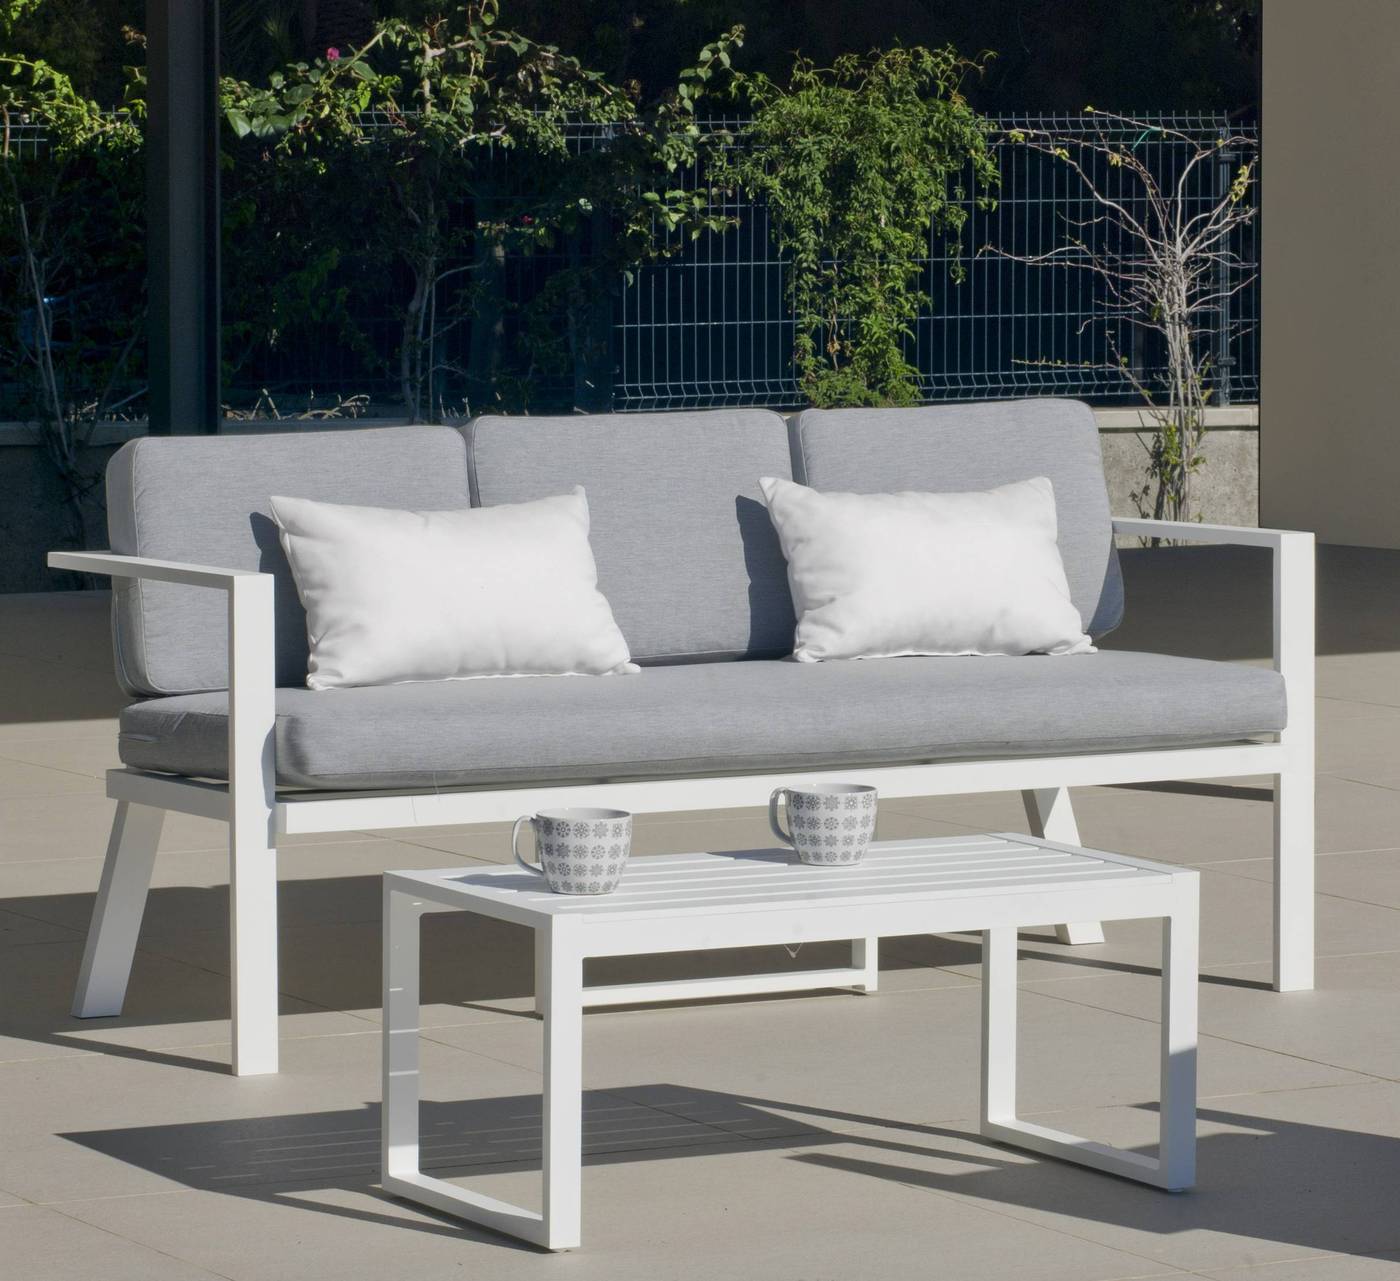 Sofá Luxe 3 plazas con cojines gran confort desenfundables. Estructura aluminio color blanco, antracita, champagne, plata o marrón.